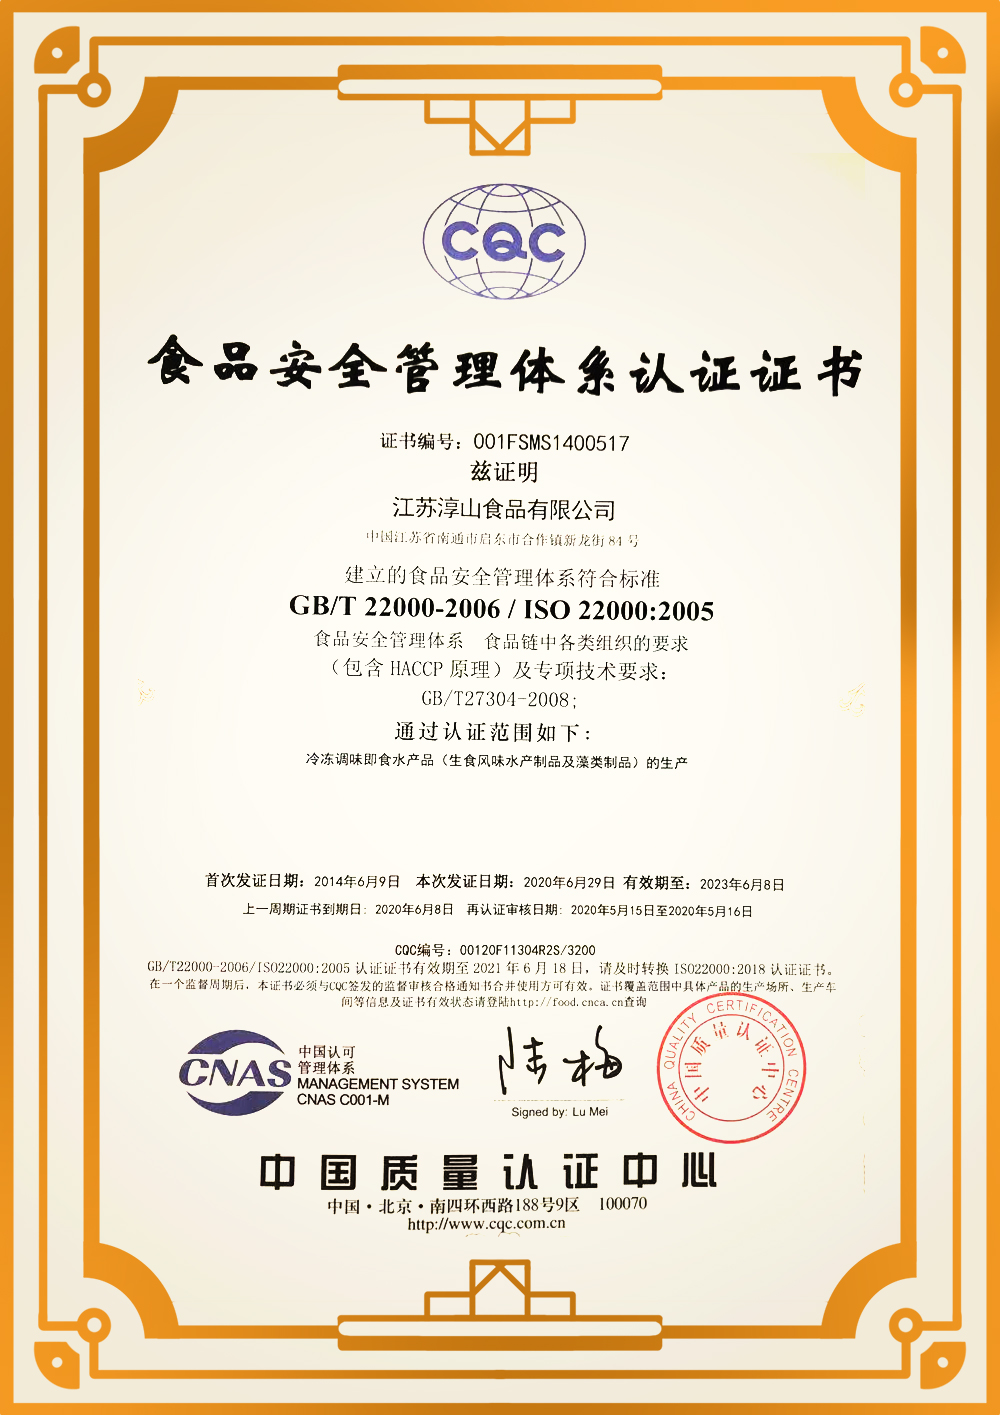 Food management system certification